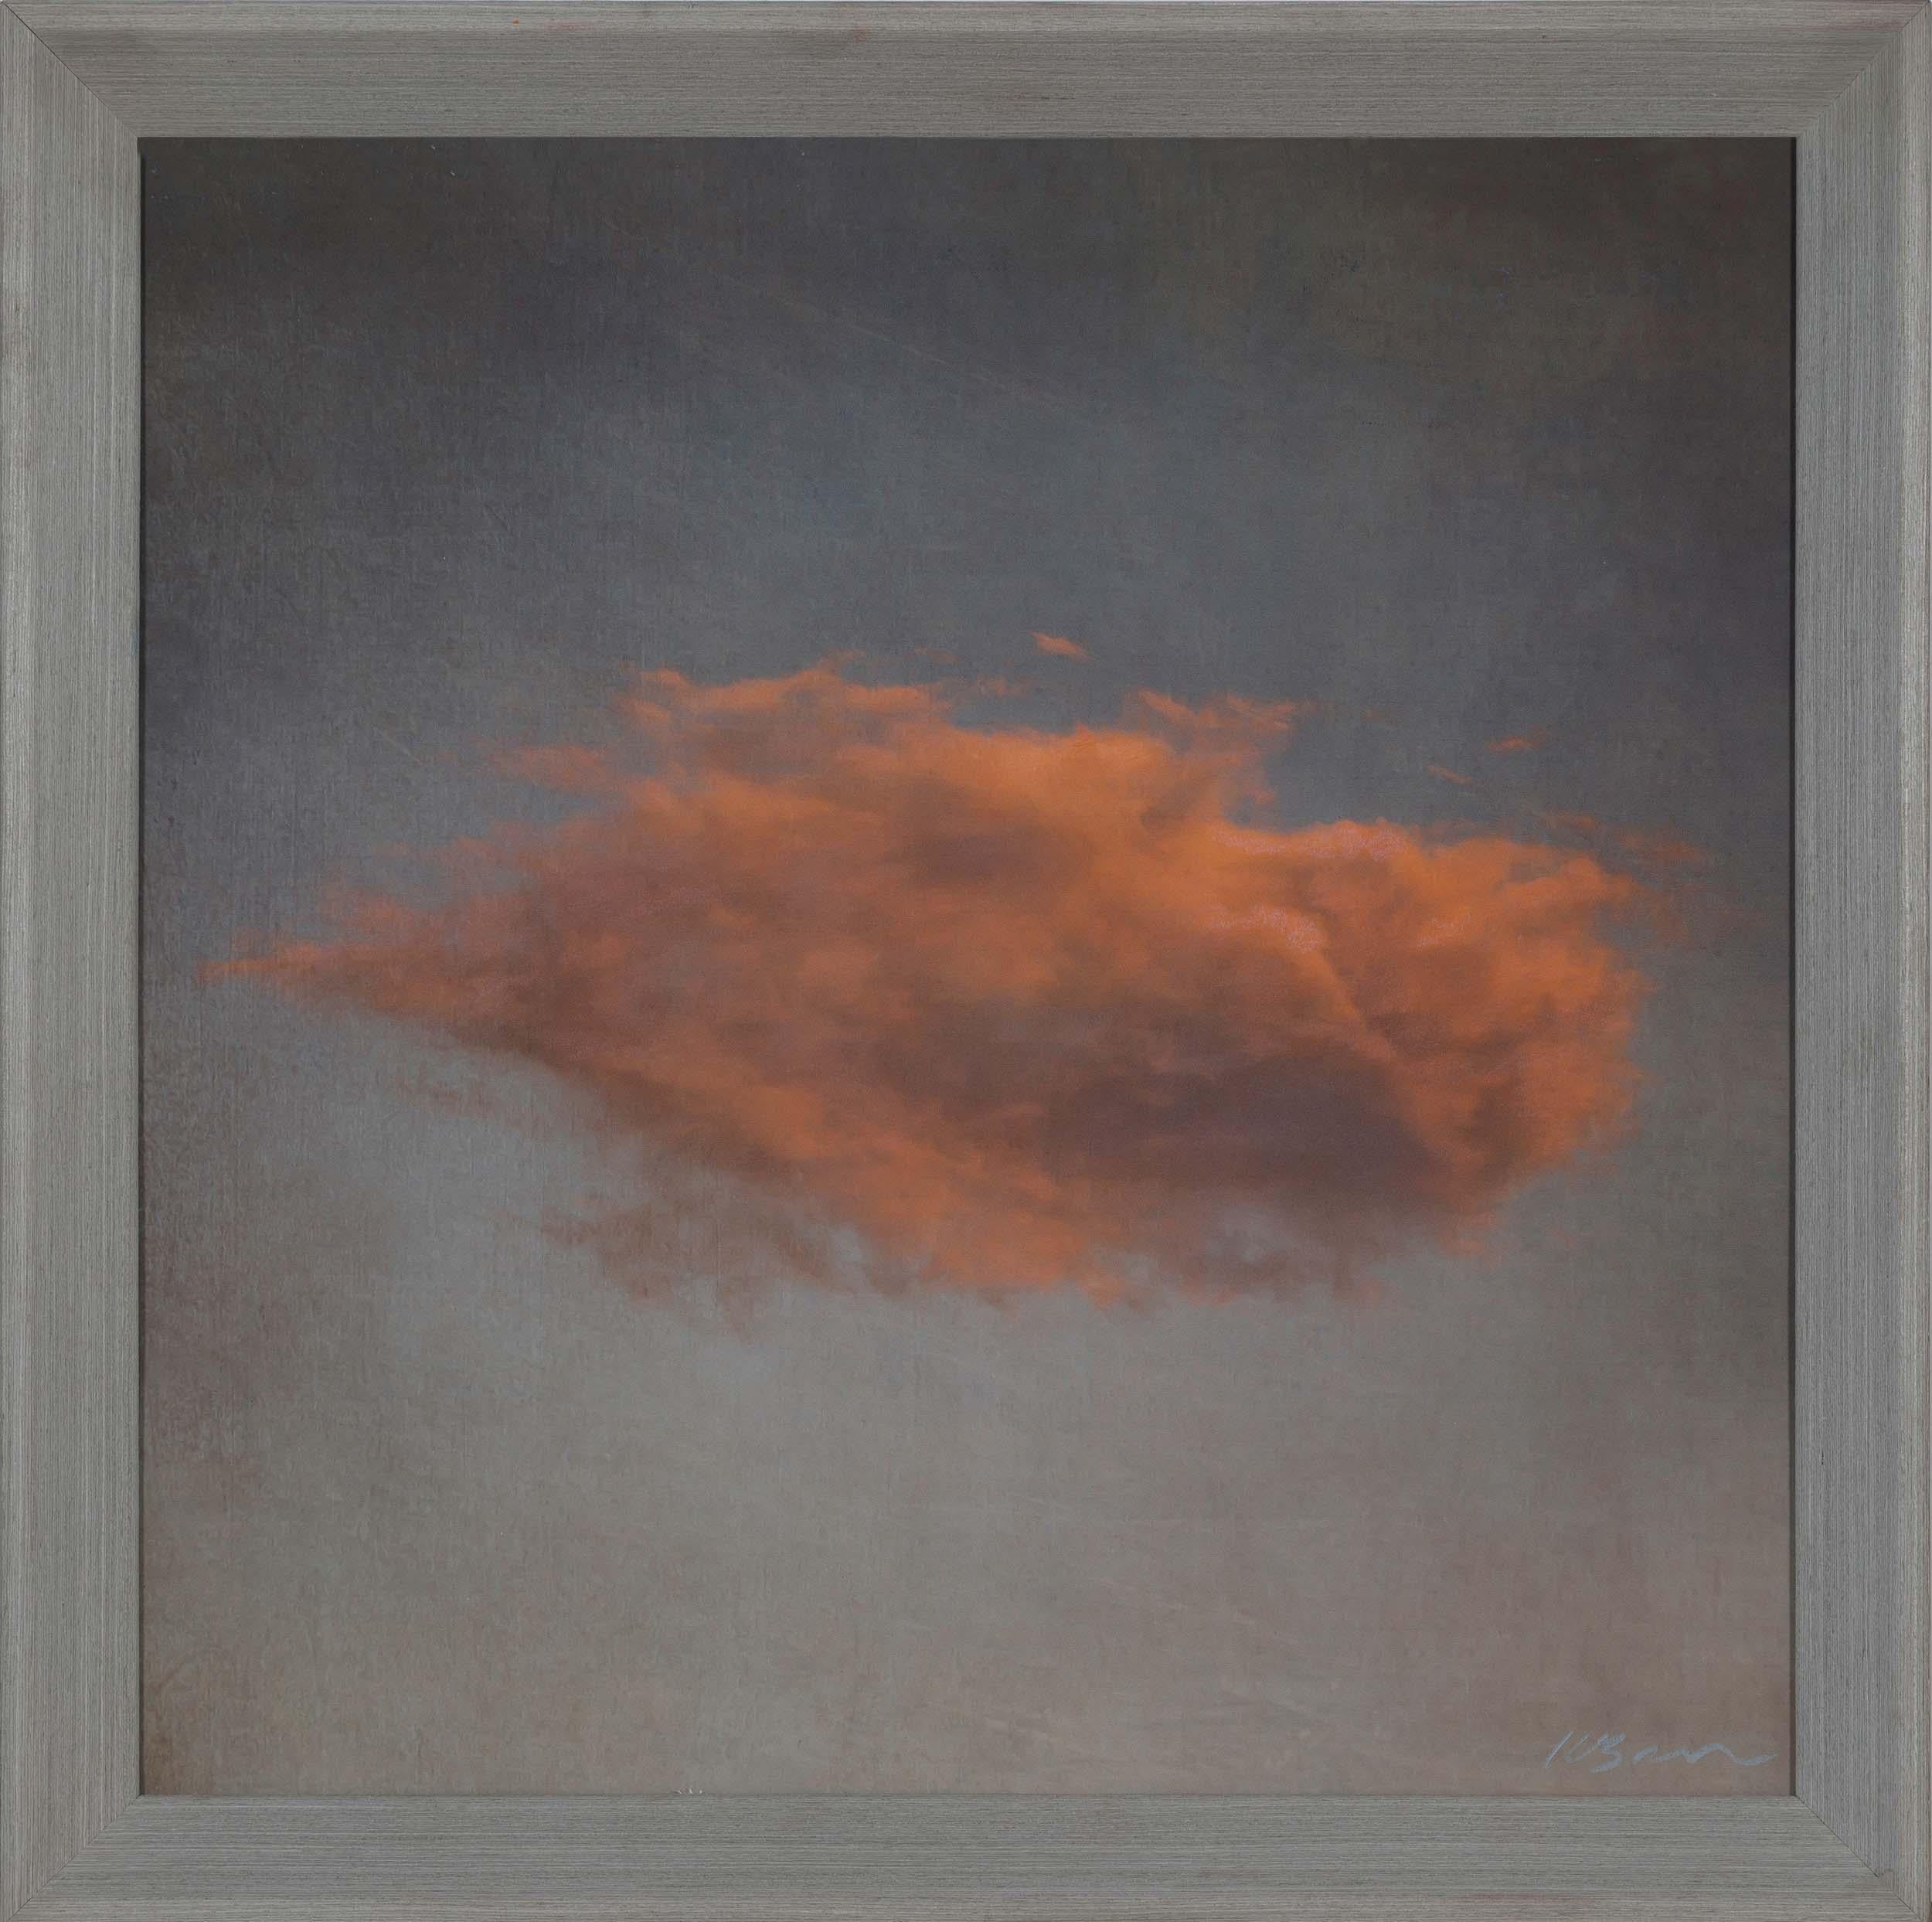 Kate Breakey Landscape Photograph - Twelve Clouds, Softly, Slowly (F)